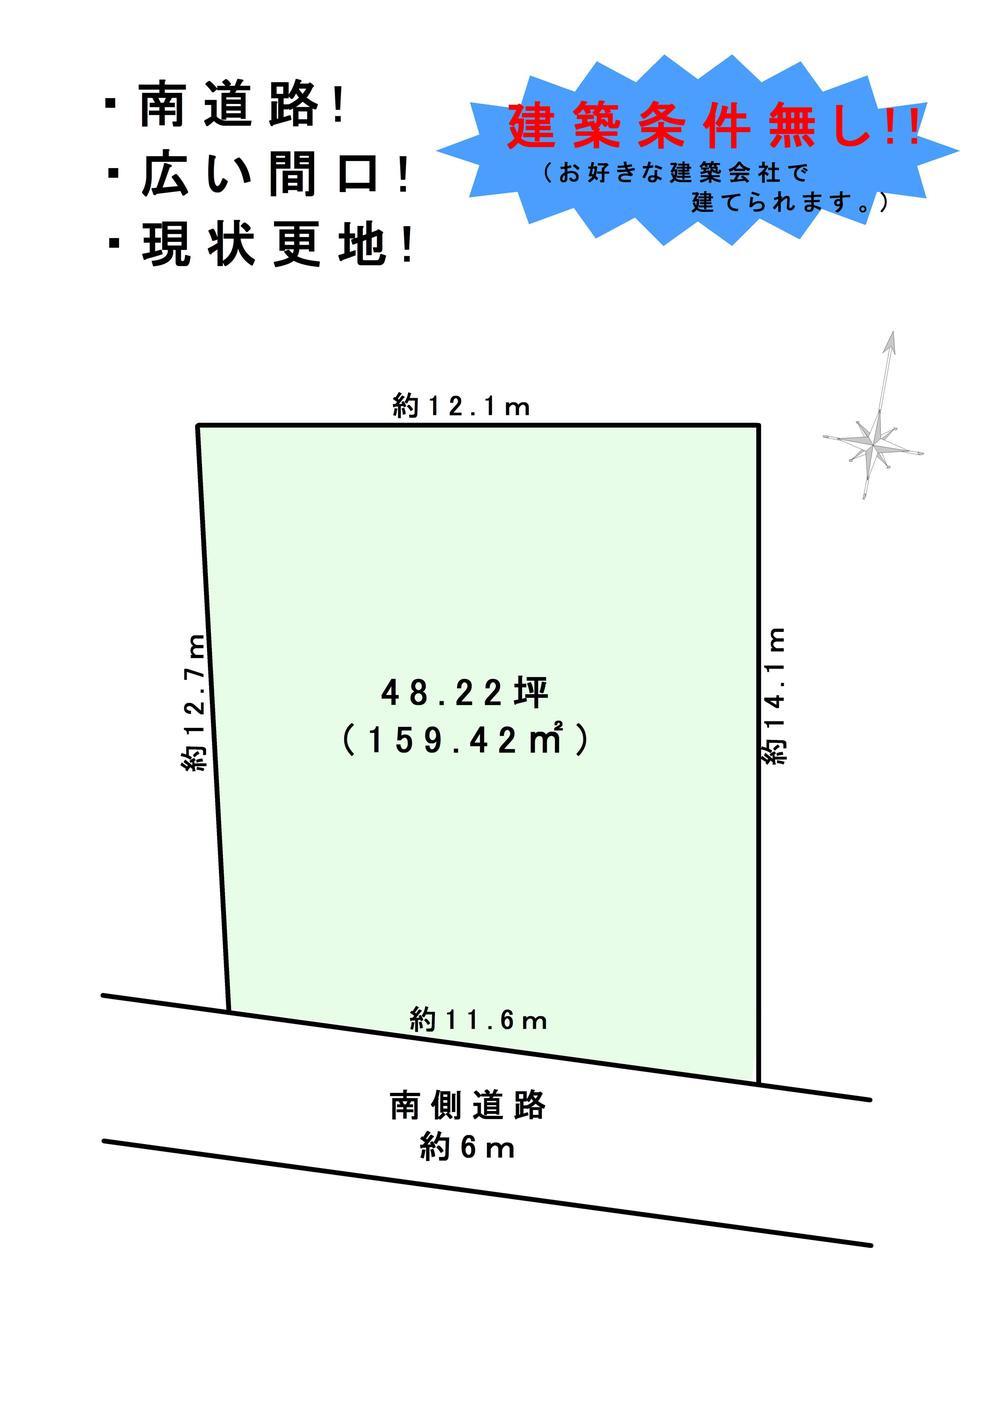 Compartment figure. Land price 16,870,000 yen, Land area 159.42 sq m